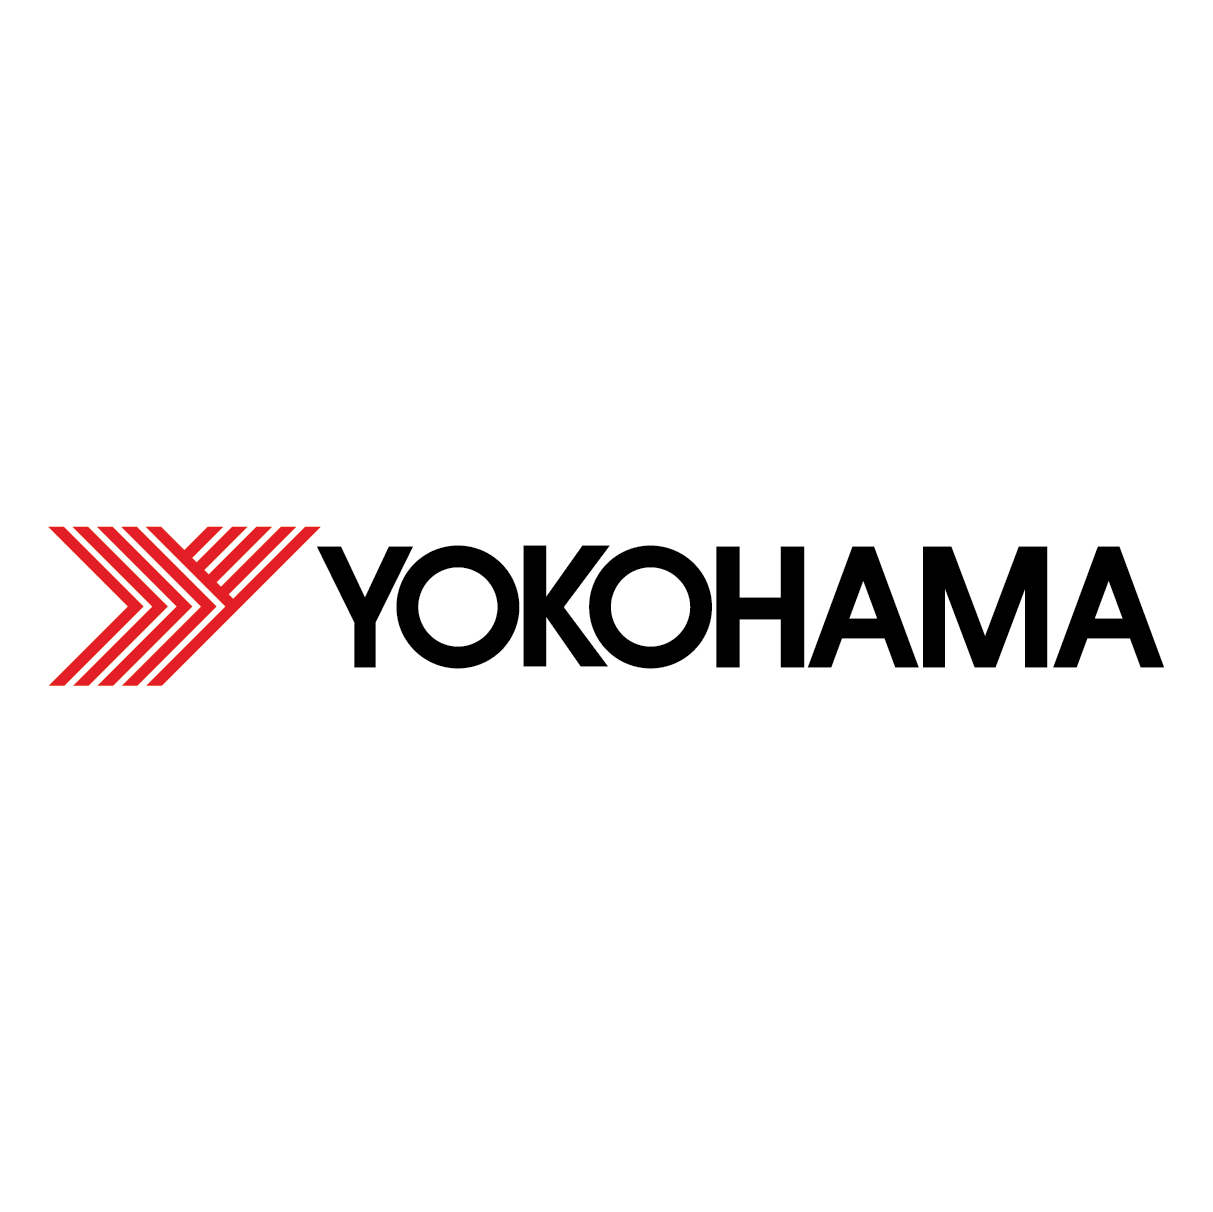 Yokohama logo.png